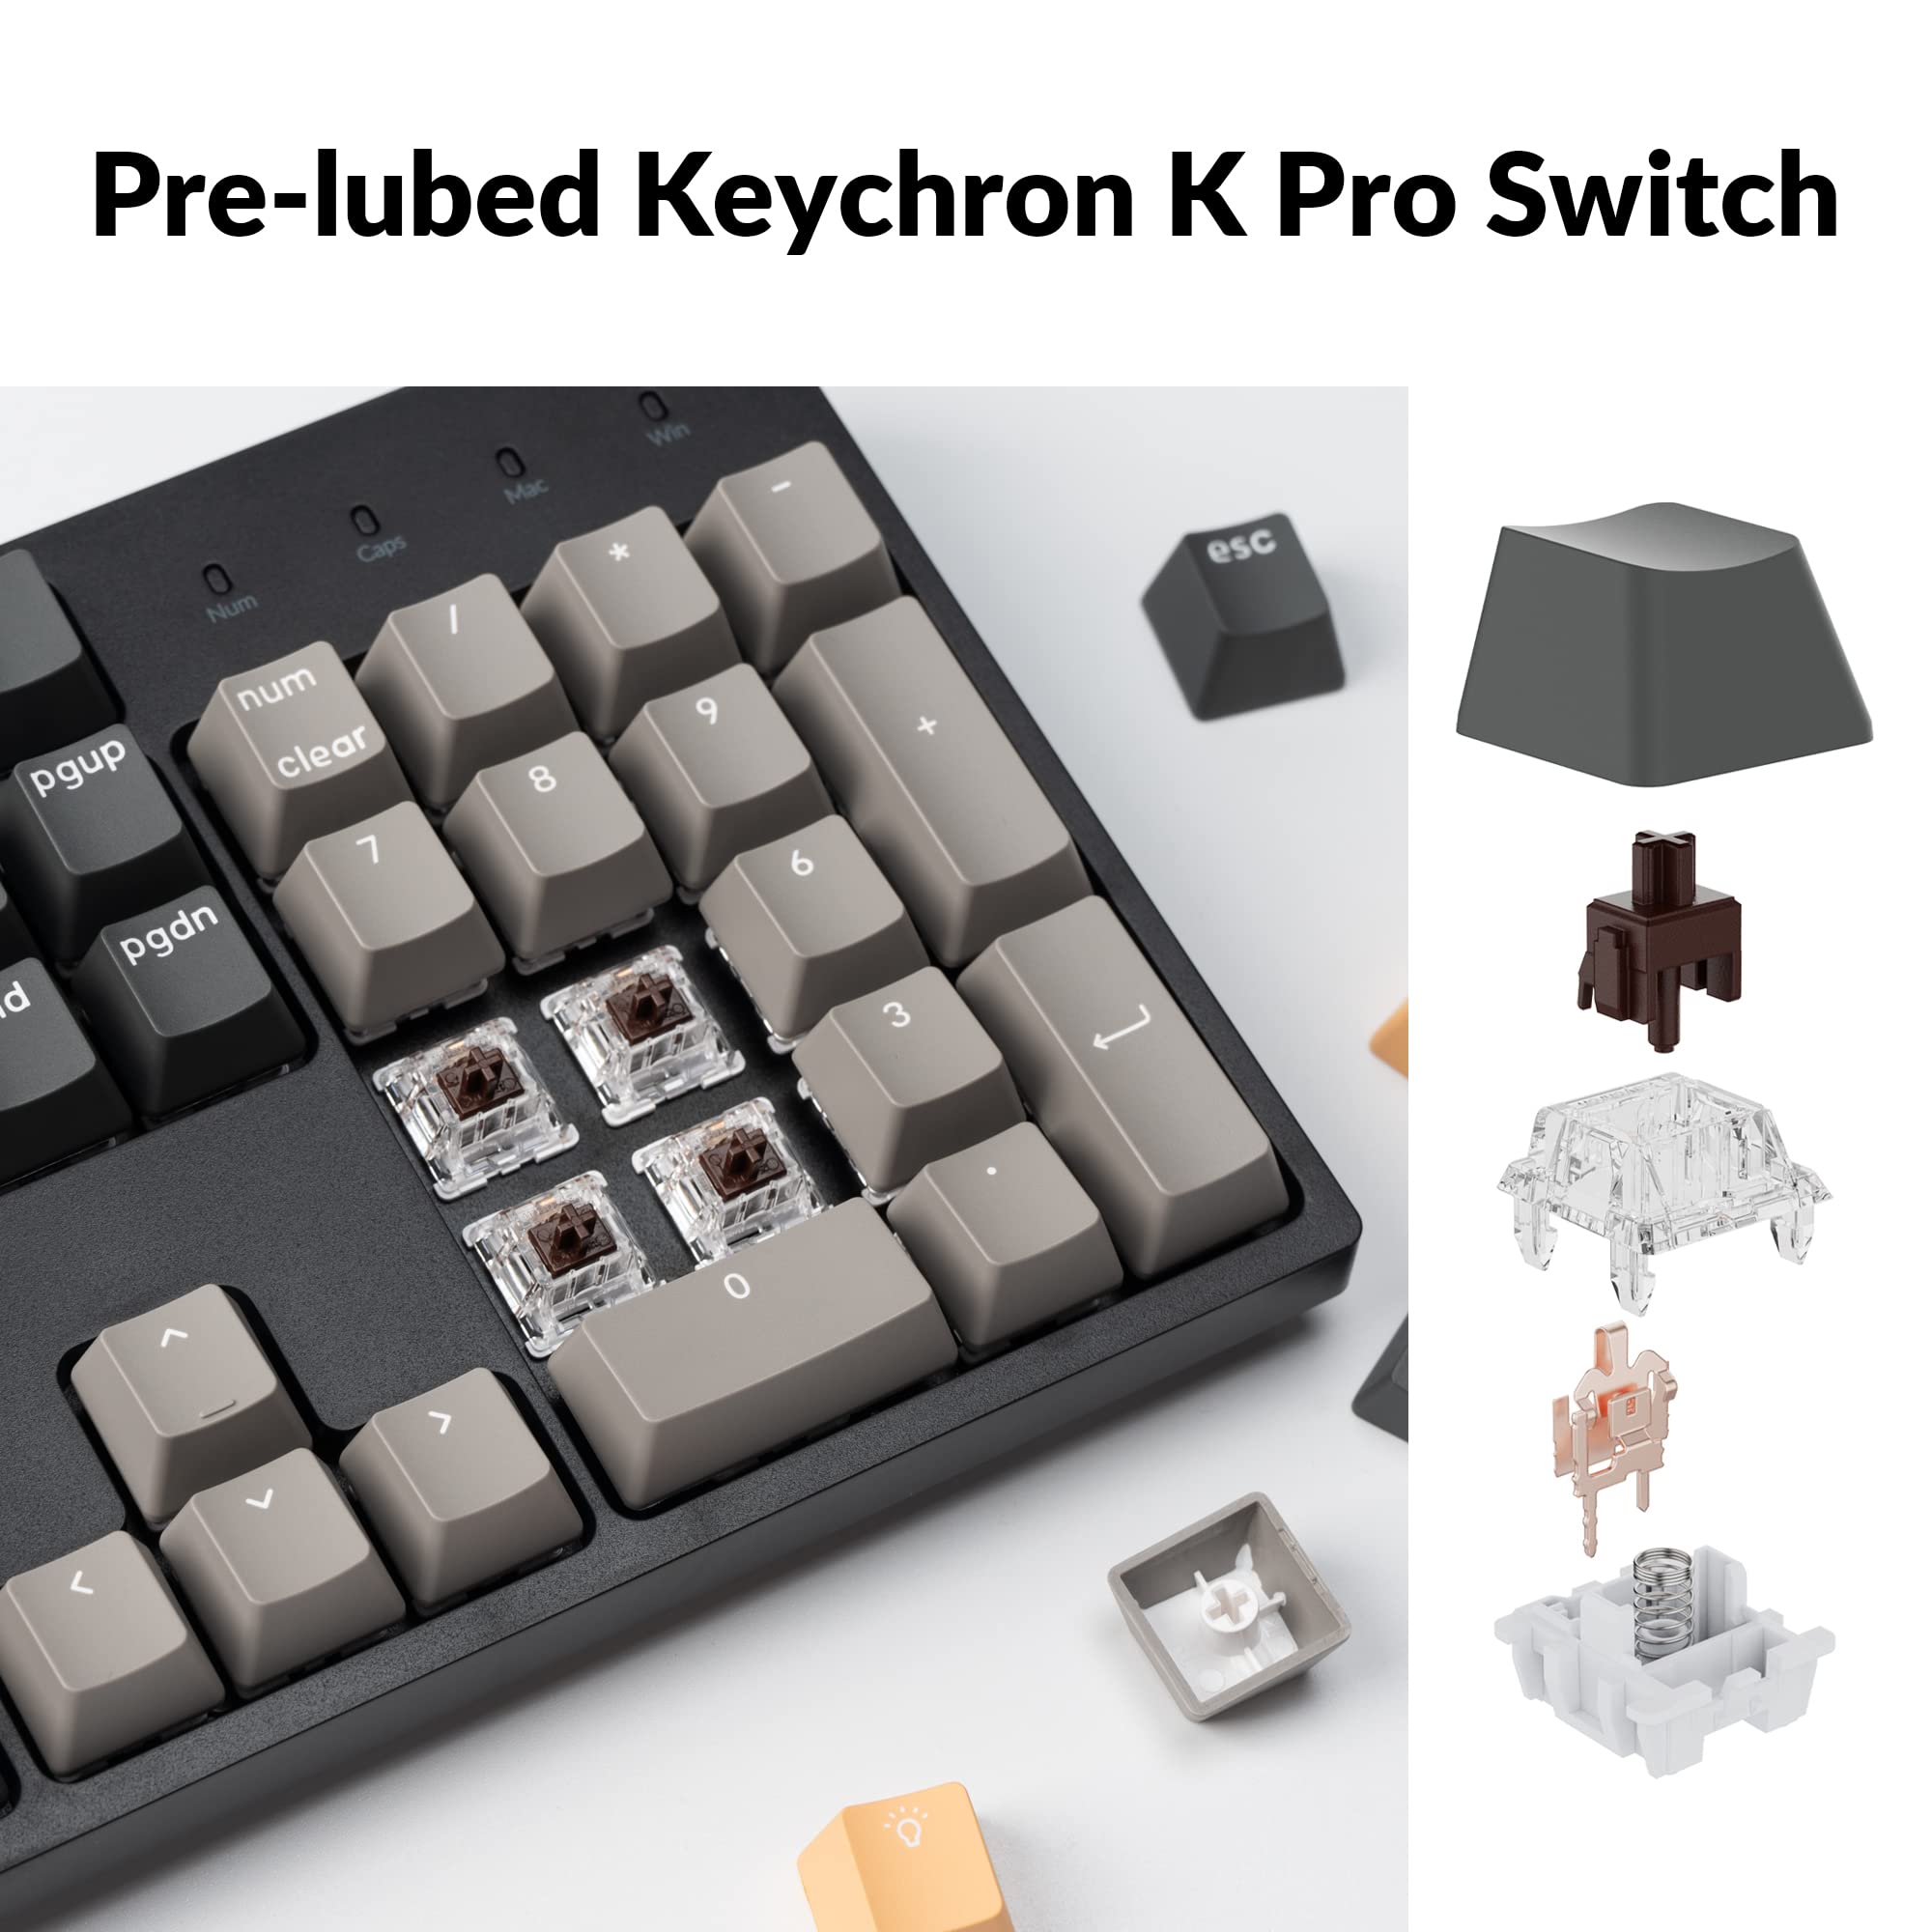 Keychron C2 Pro Wired QMK/VIA Mechanical Keyboard Full Size Layout Custom Programmable Macro RGB Backlit with Keychron K Pro Brown Switch OEM Profile Double-Shot PBT Keycaps for Mac Windows Linux